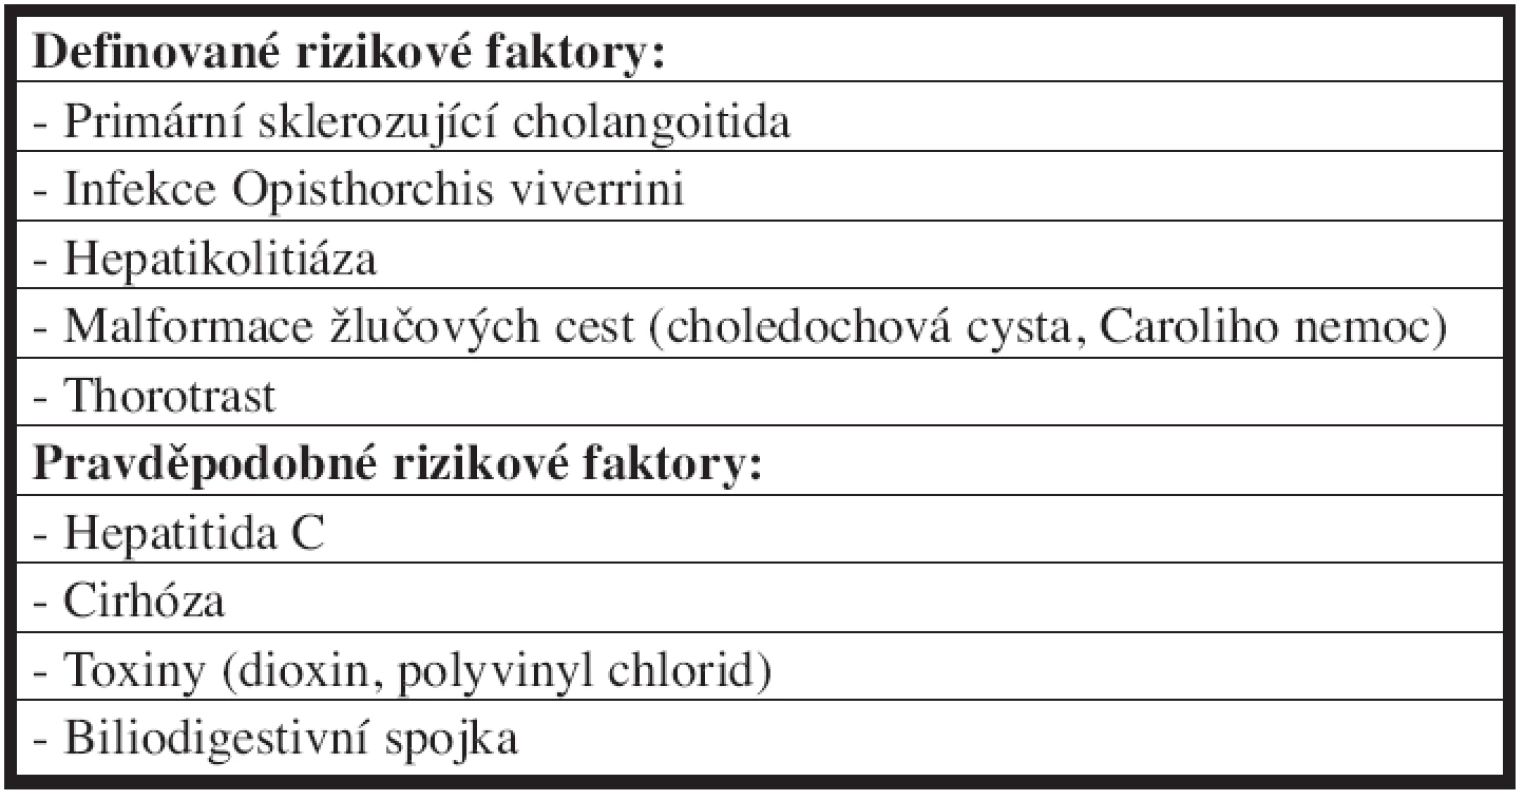 Rizikové faktory vzniku cholangiokarcinomu
Tab. 1: Risk factors of the cholangiocarcinoma